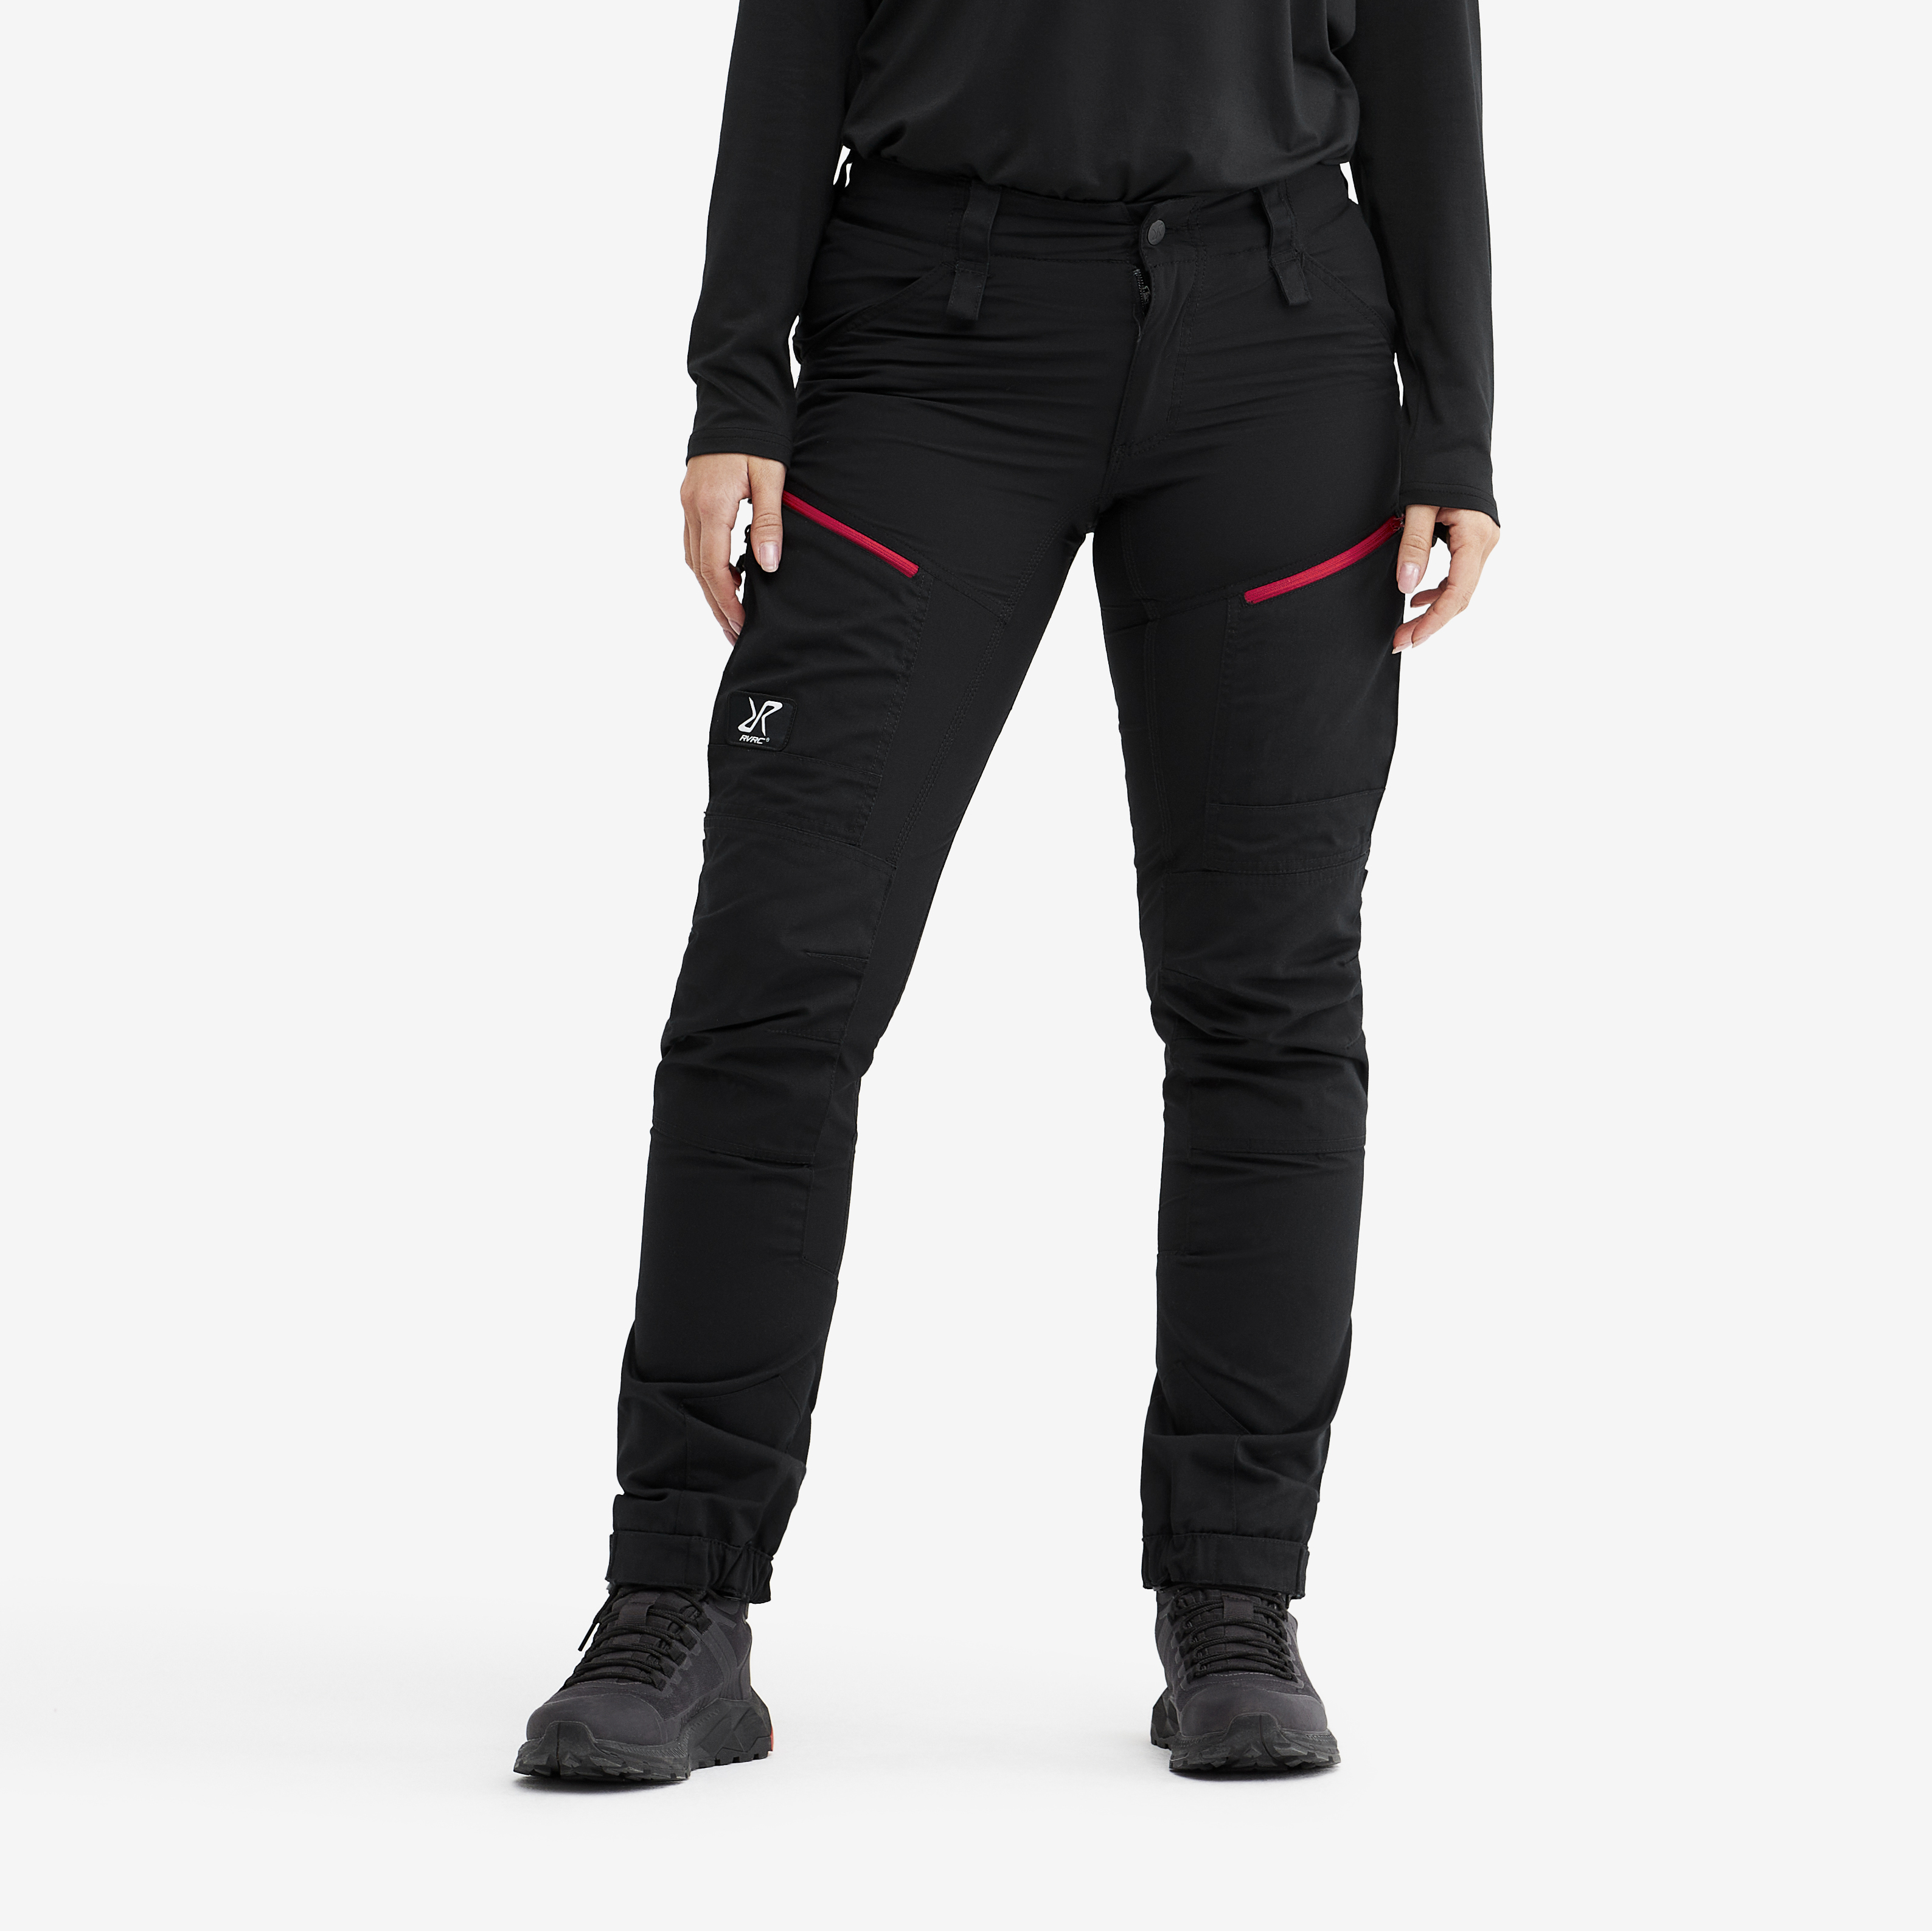 RVRC GP Pro Pants Black/Red Naiset